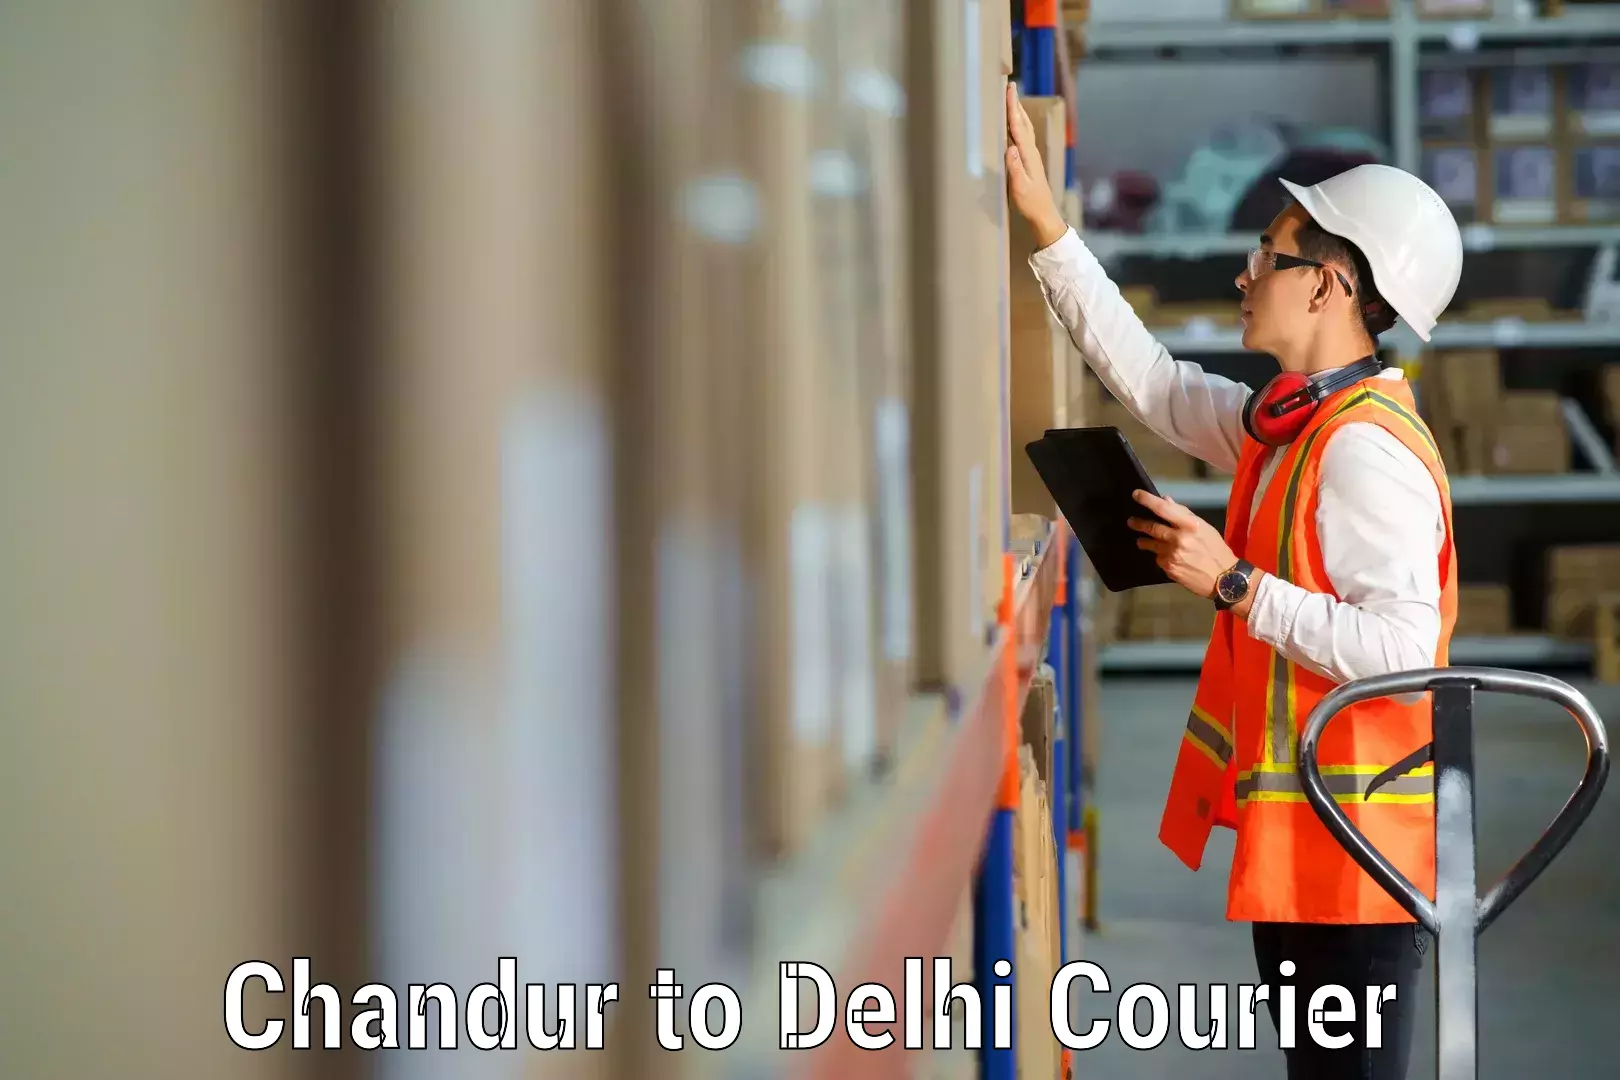 Professional moving company Chandur to Delhi